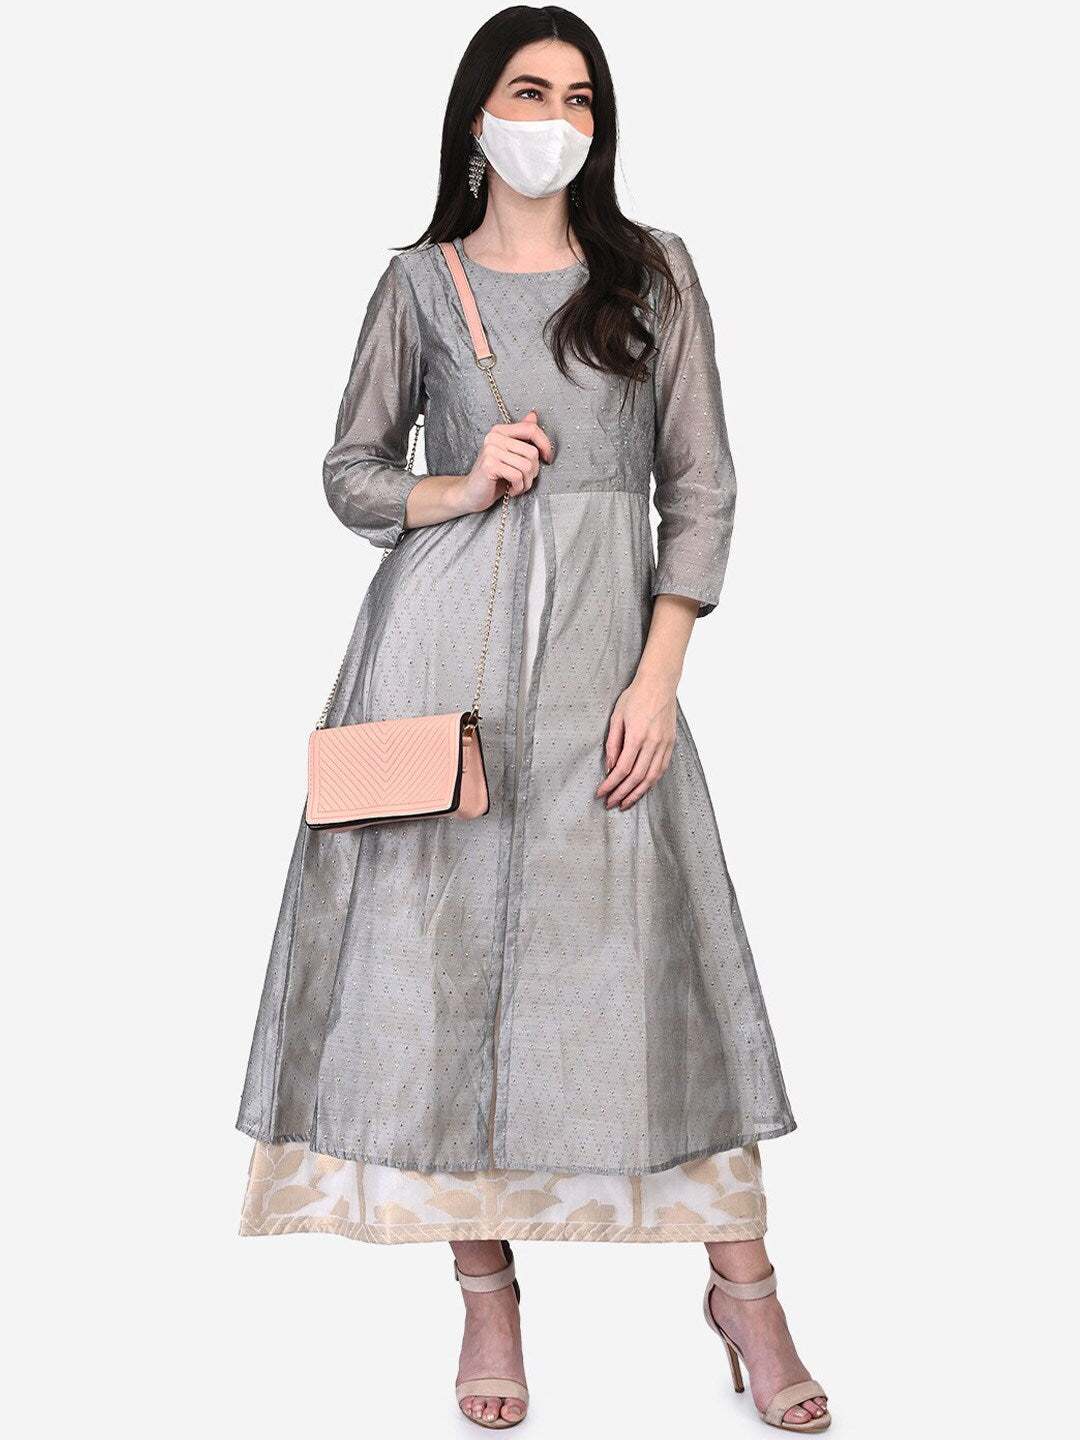 Be Indi Grey & White Floral Layered Ethnic Maxi Dress